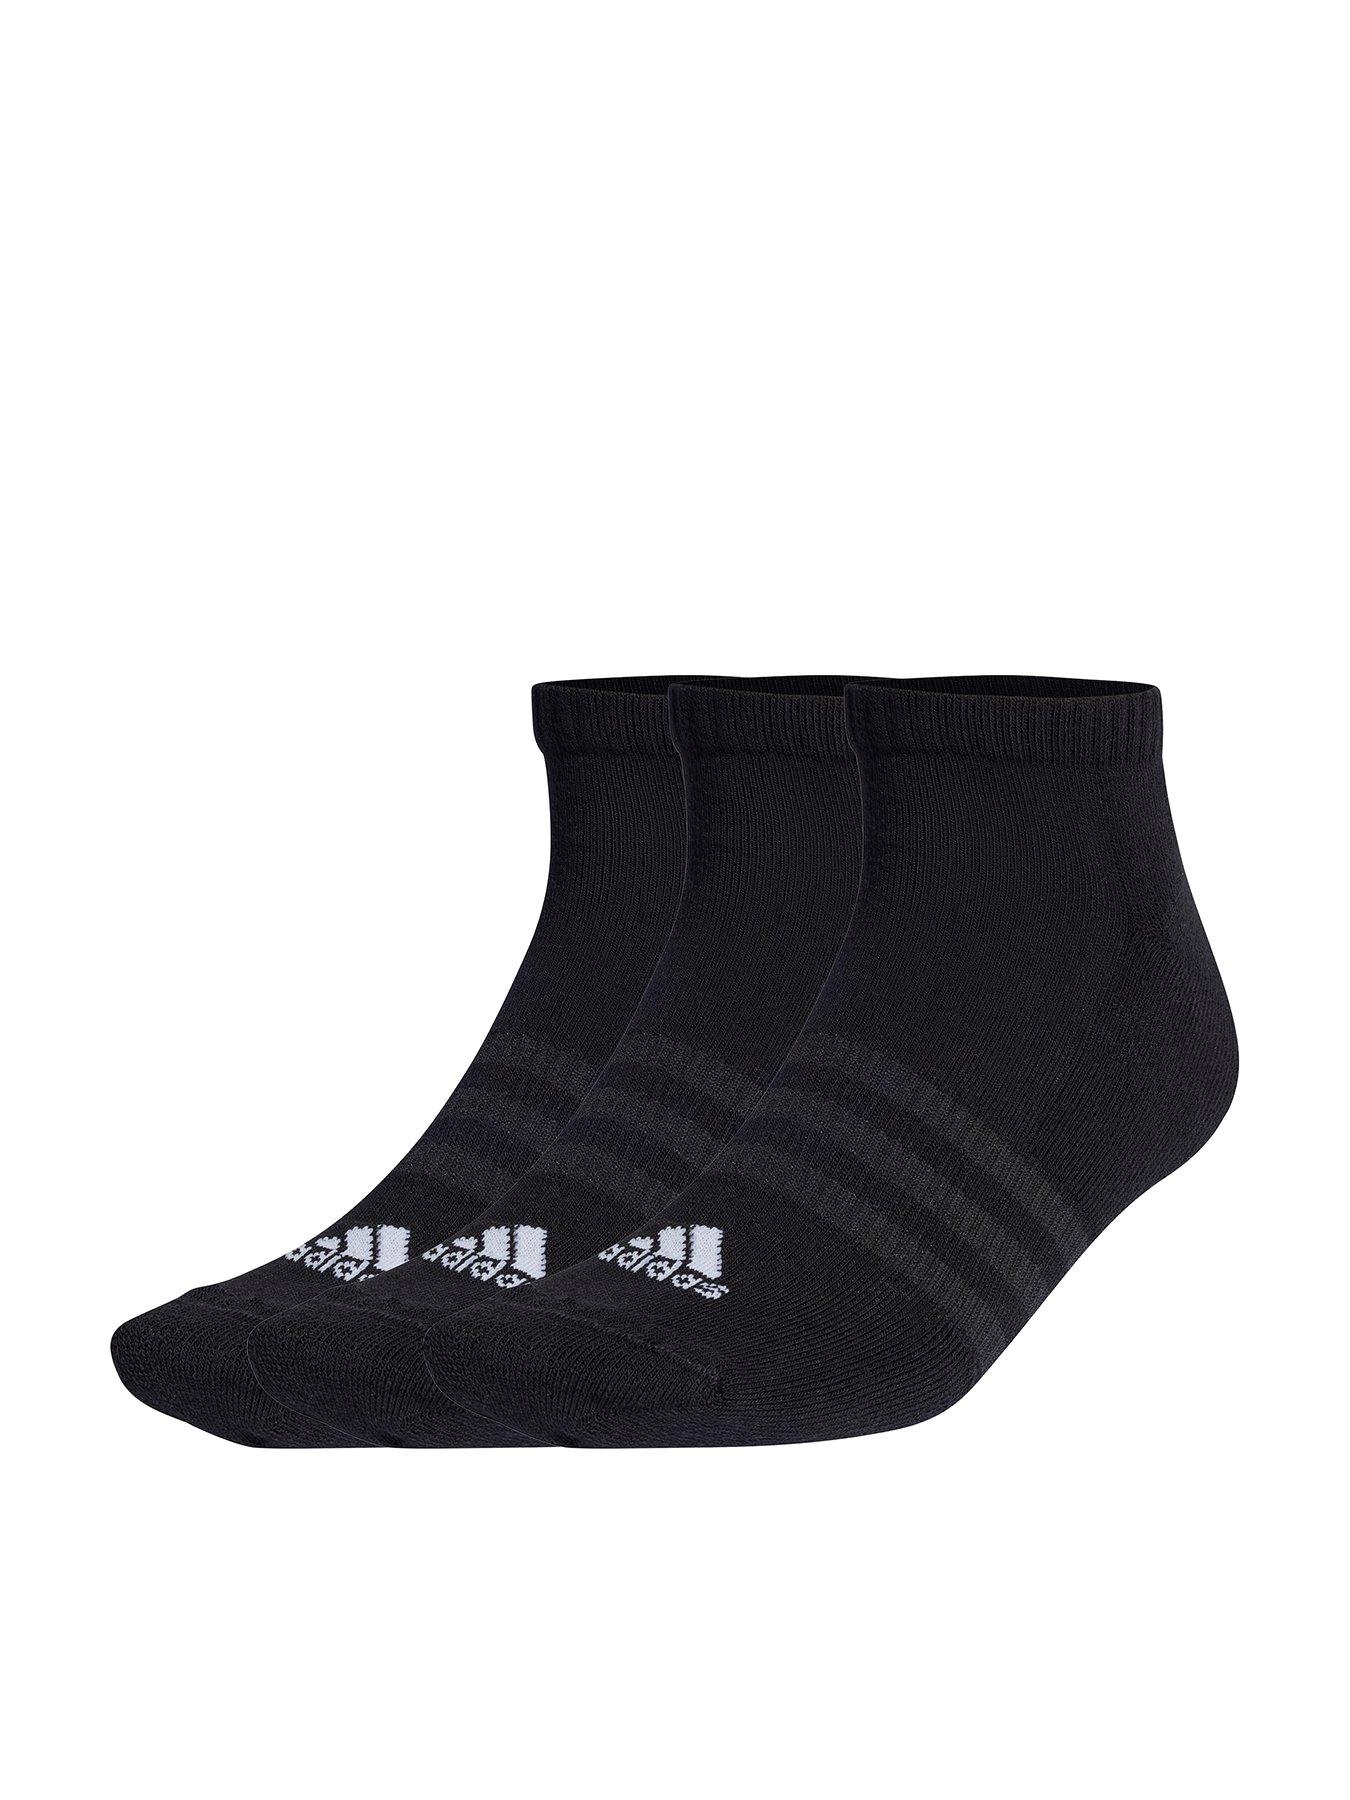 No Nonsense Women's Sleek Causal Socks – Black, 3 pk - Pick 'n Save